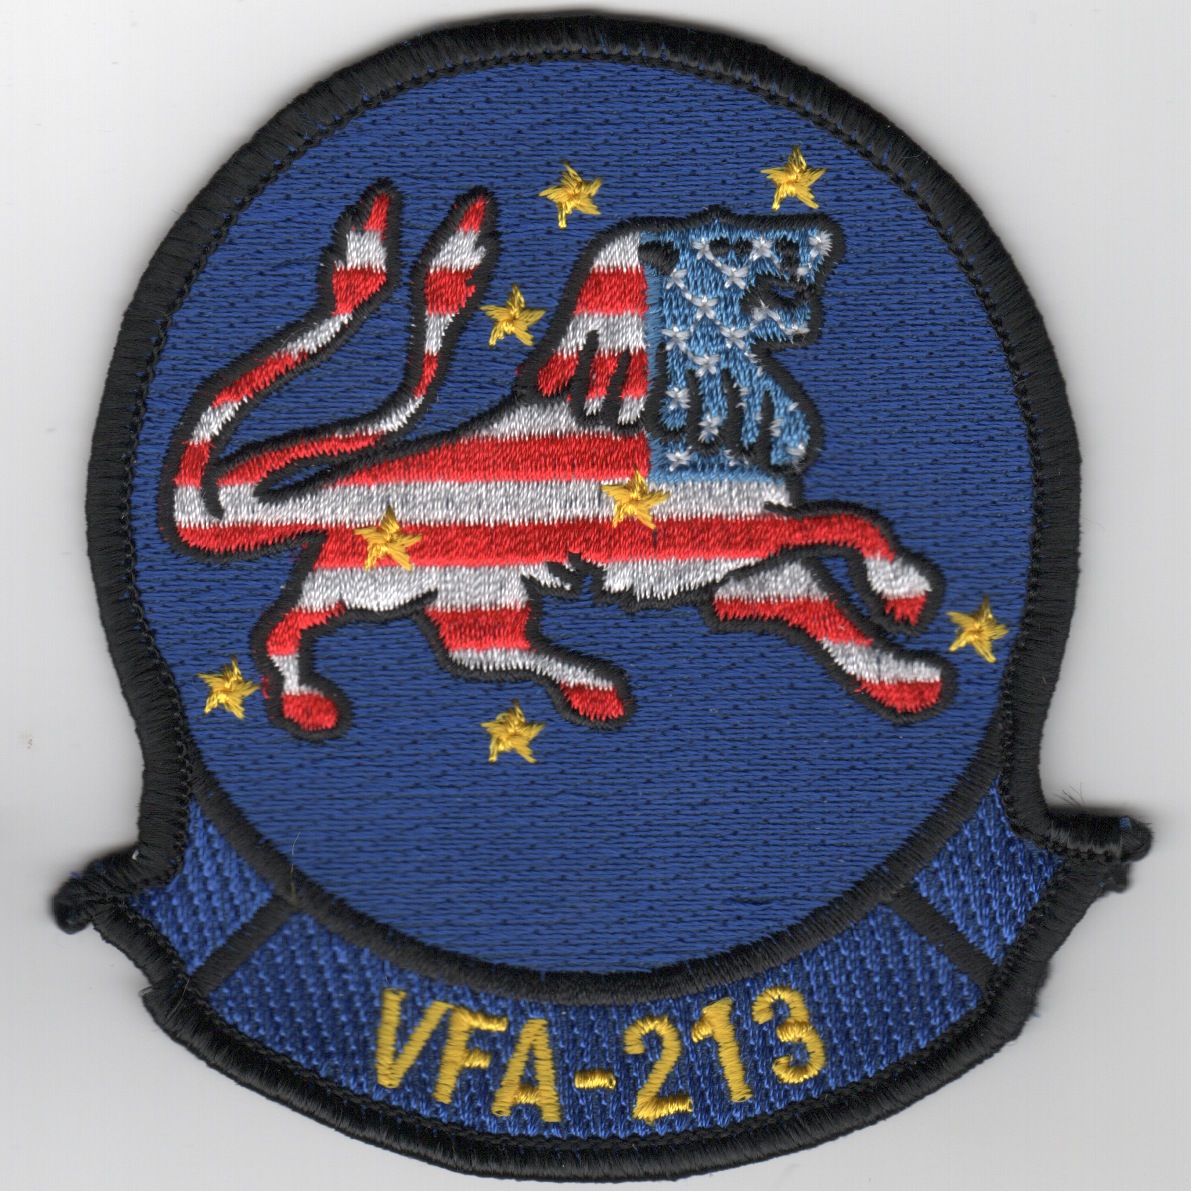 VFA-213 Squadron Patch (R/W/B Lion)